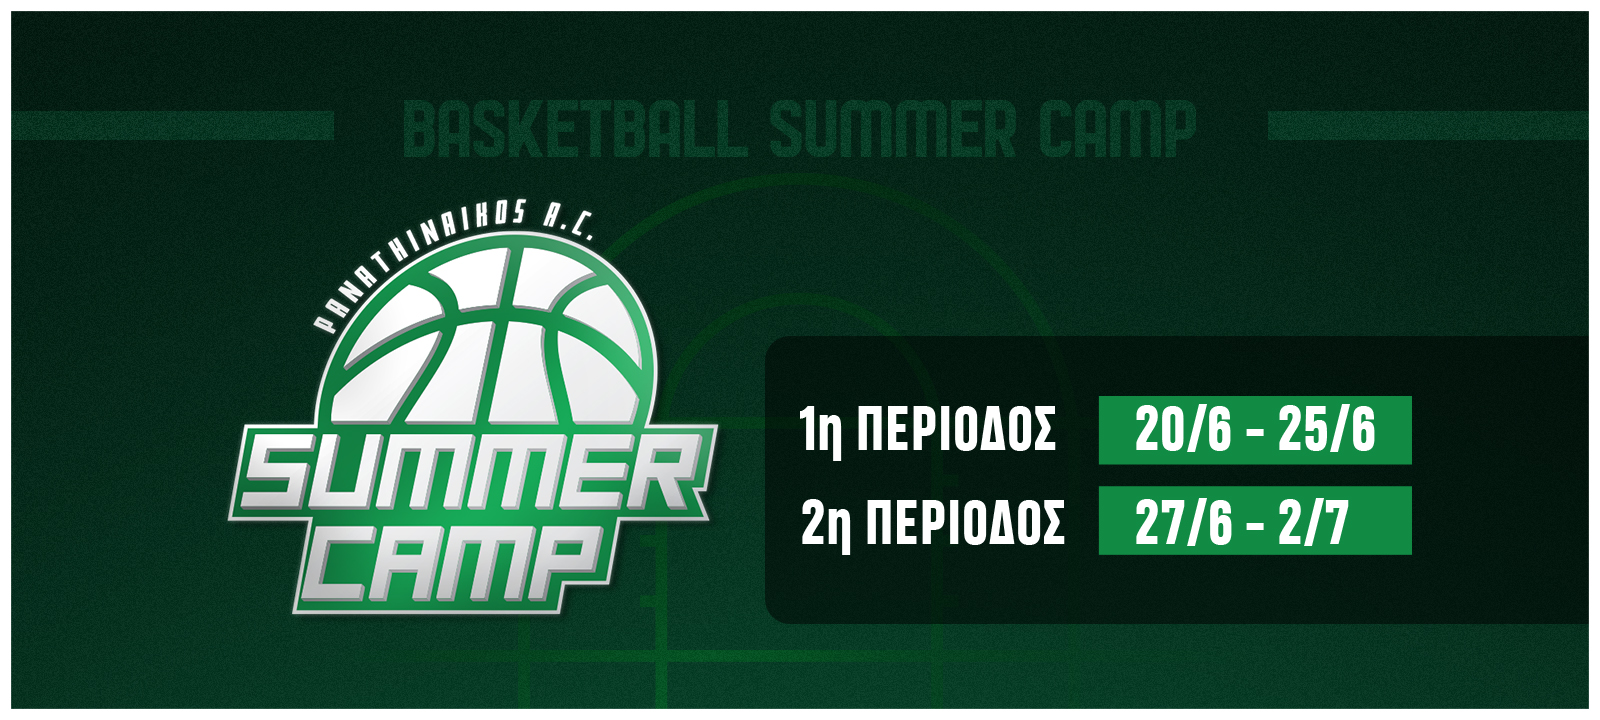 Basketball Summer Camp